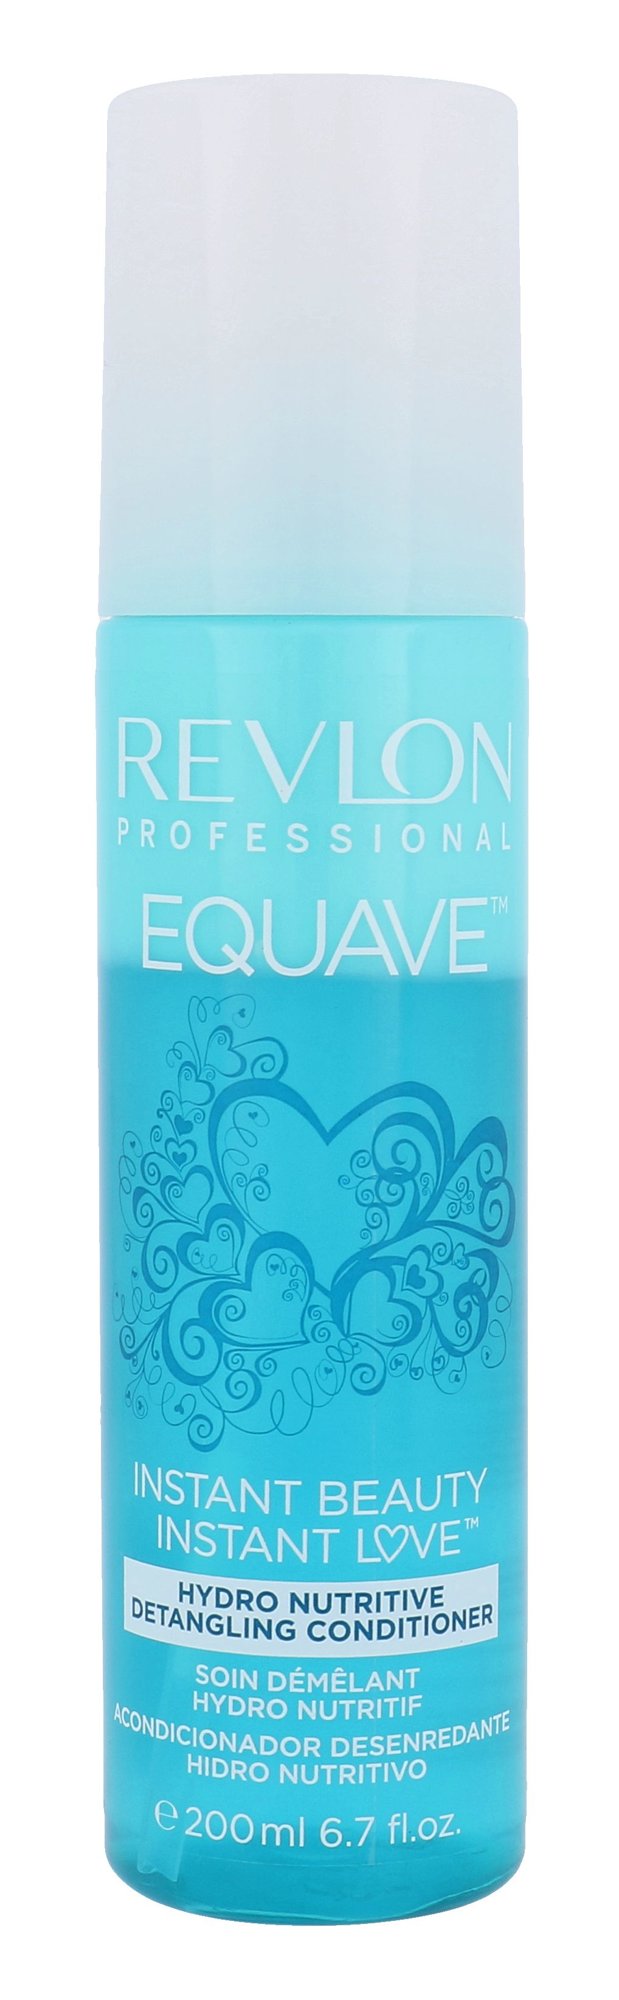 Revlon Equave Instant Beauty Love Hydro Conditioner